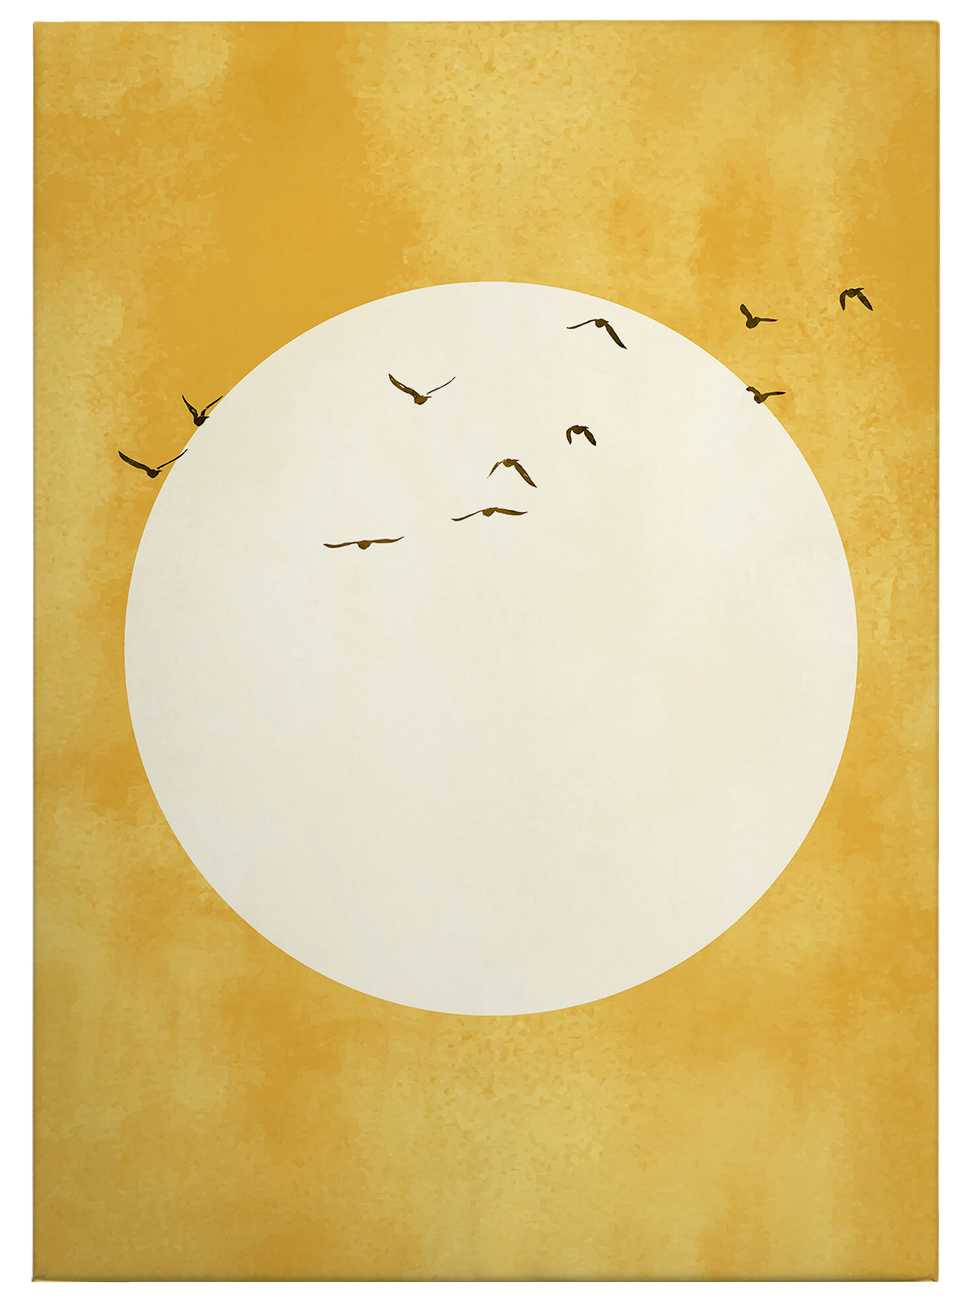             Cuadro en lienzo "Sunshine" de Kubistika - 0,50 m x 0,70 m
        